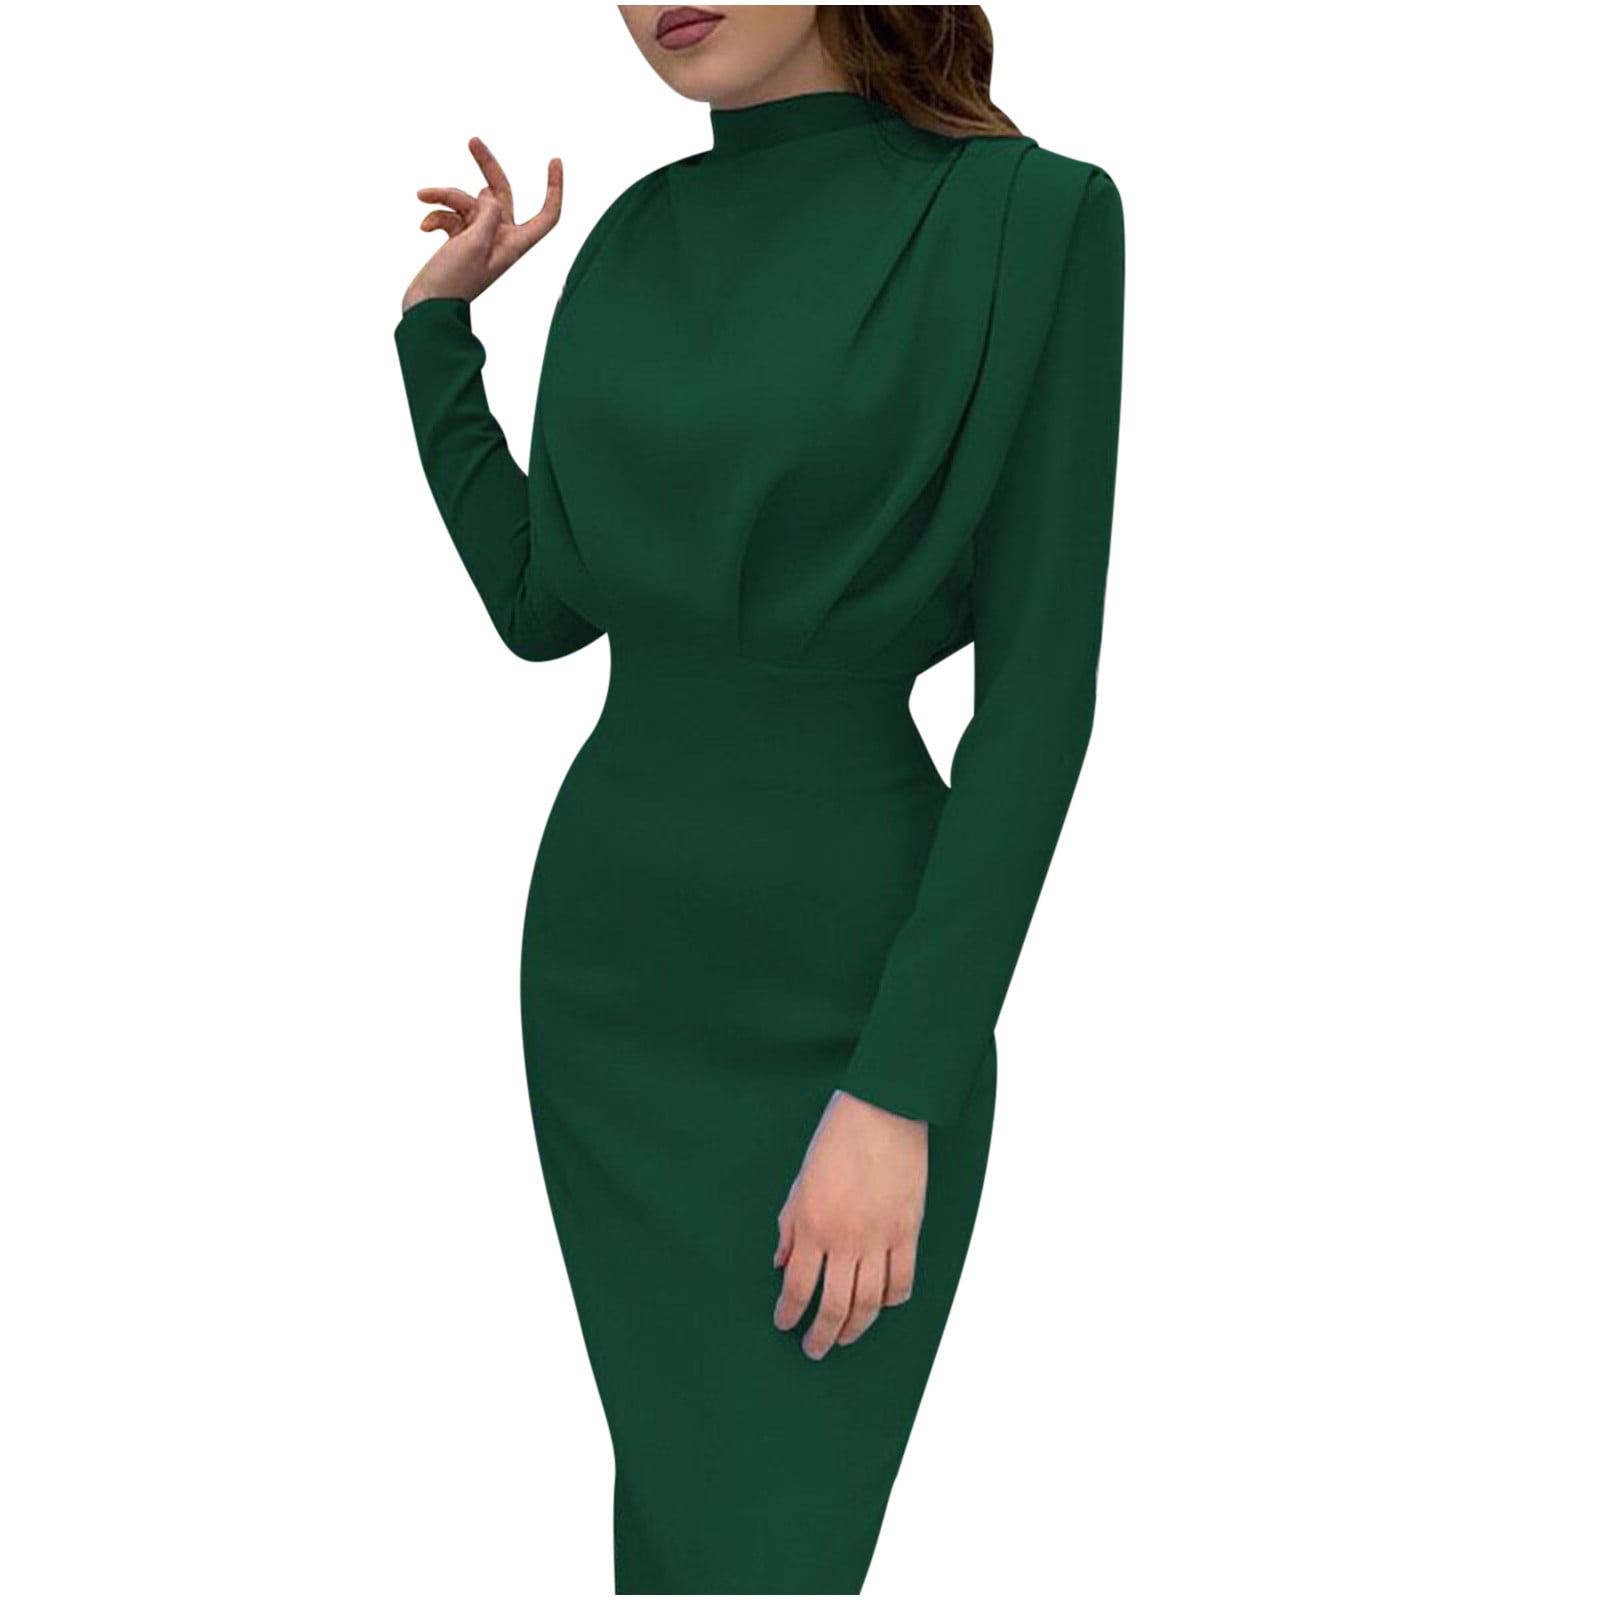 green work dress